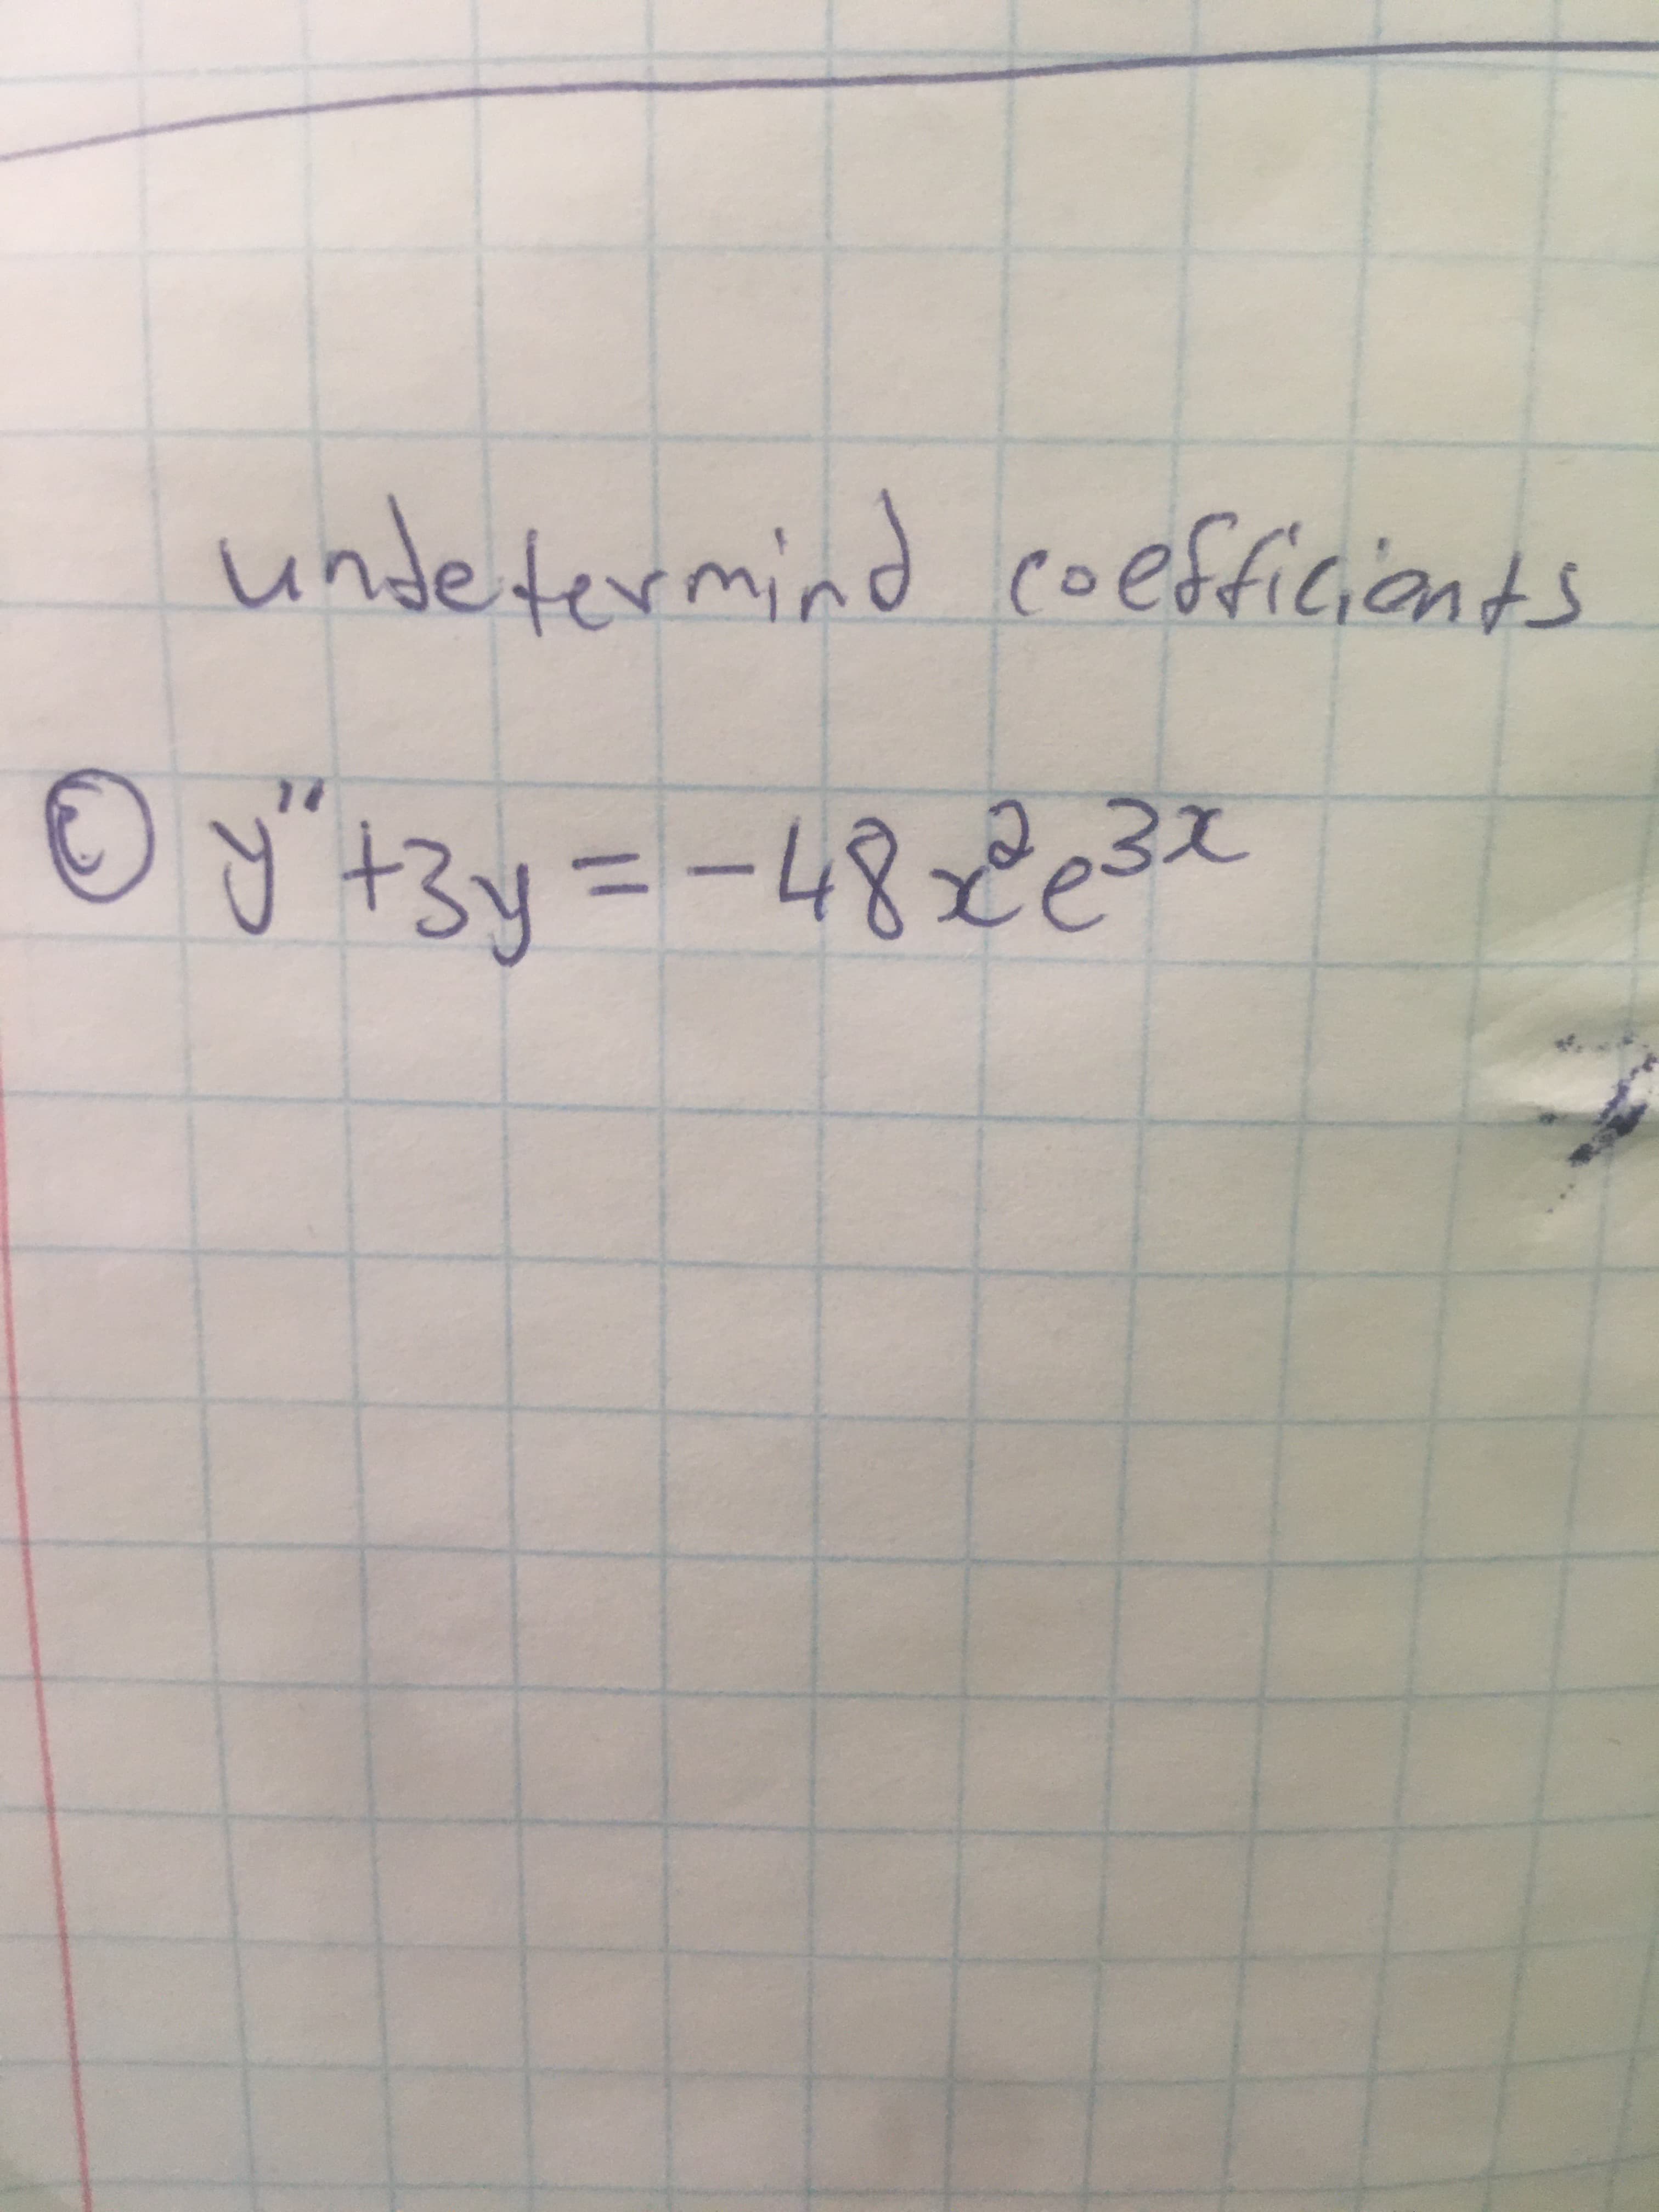 undetermind coefficiants
ー482e32
な87-=ドミ+.,R G
